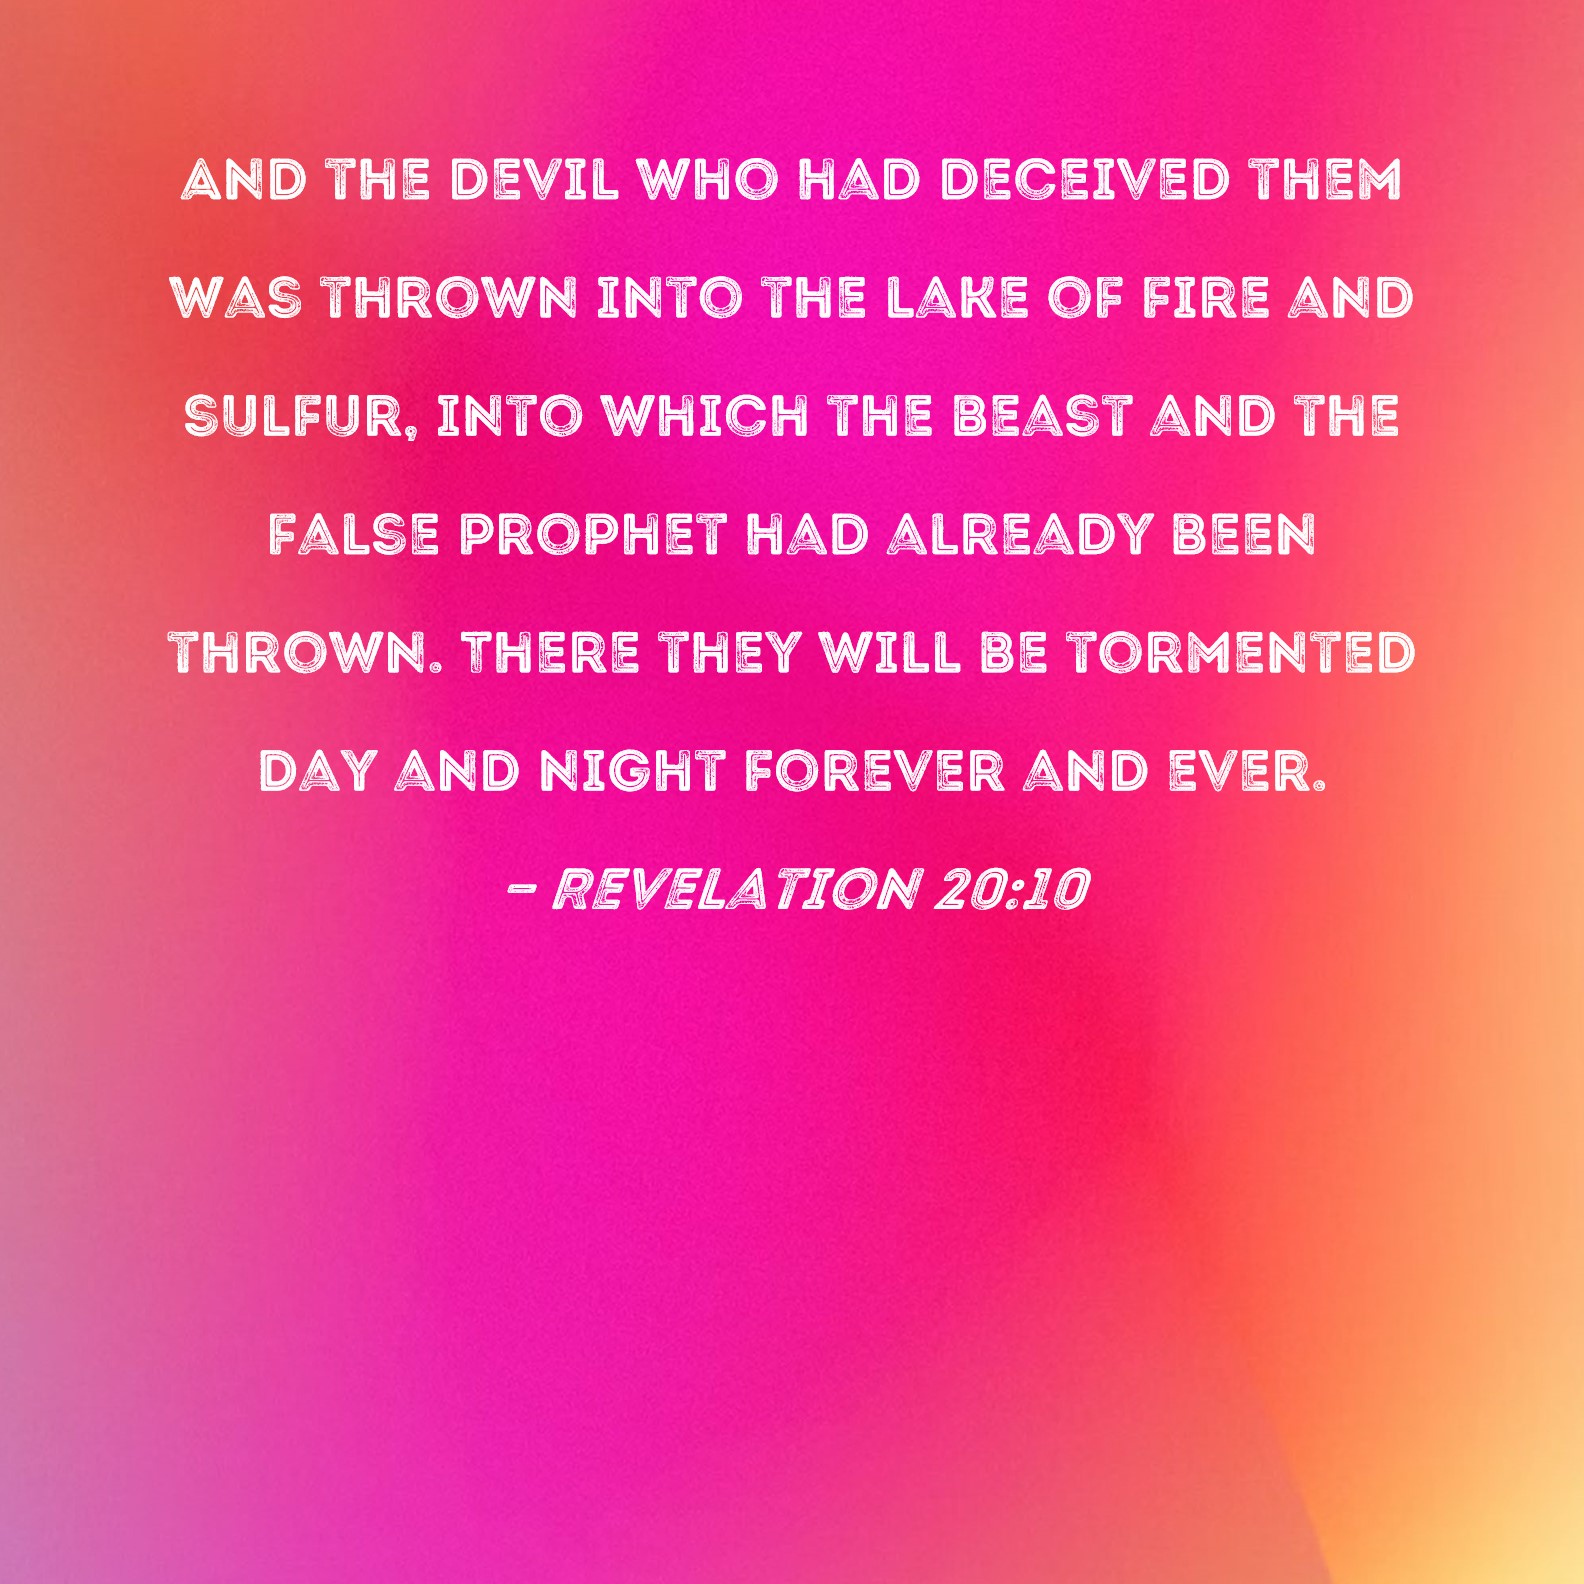 lake of fire revelation